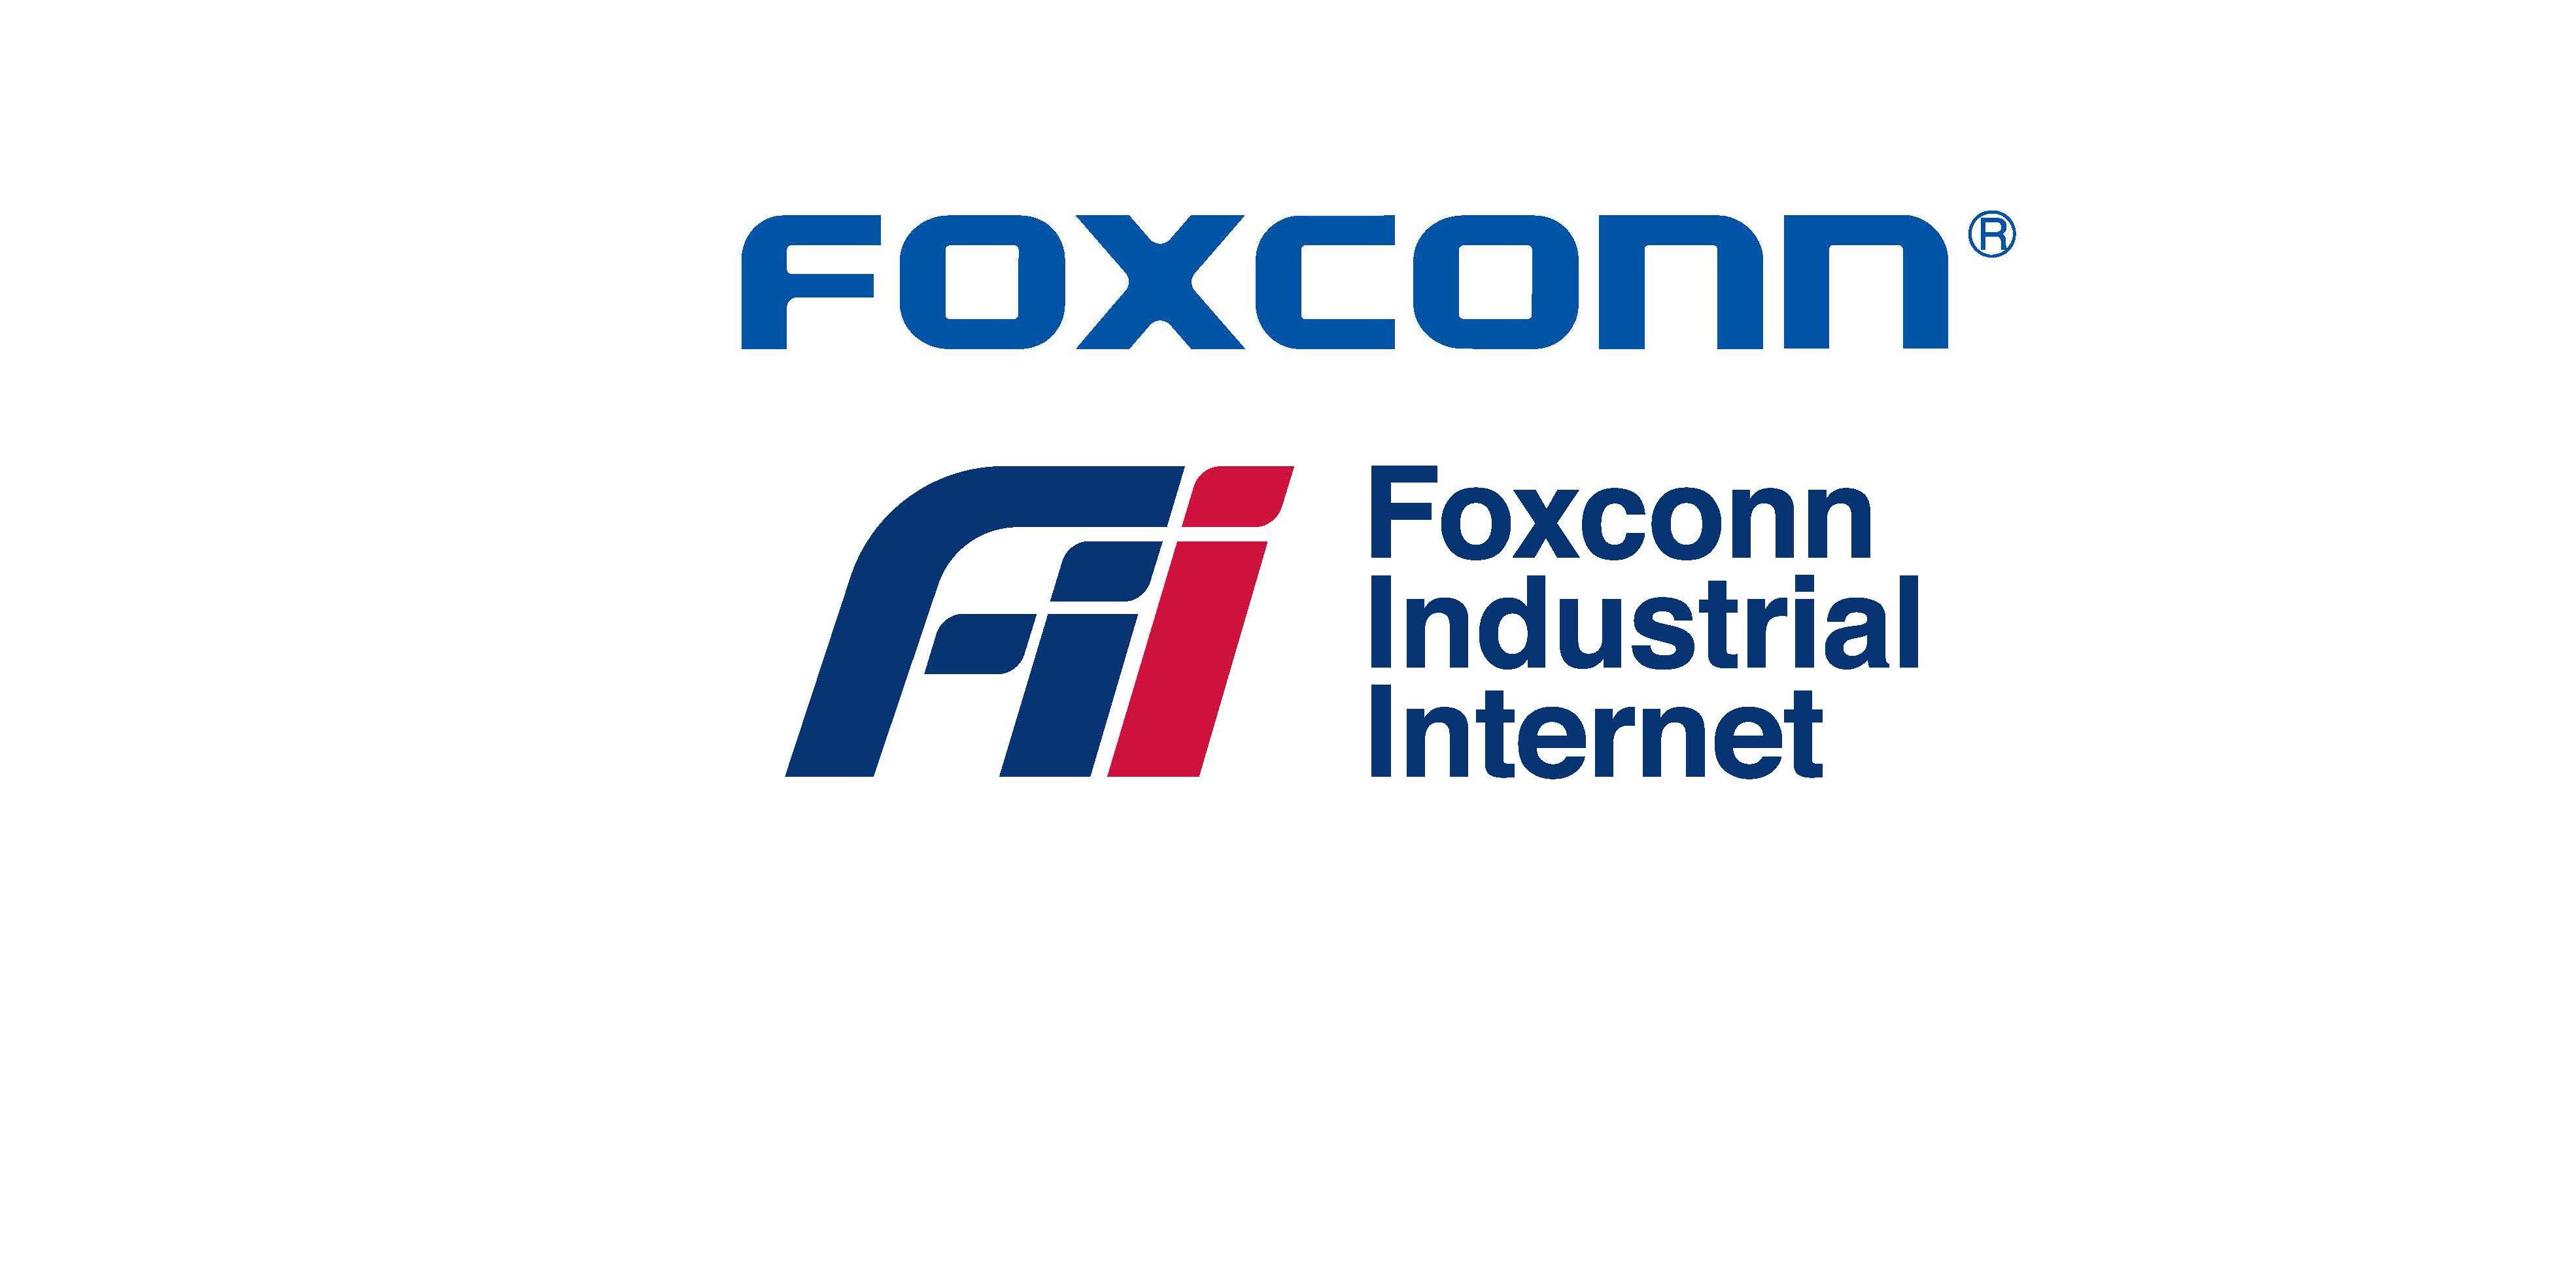 Foxconn + Foxconn Industrial Internet Logo